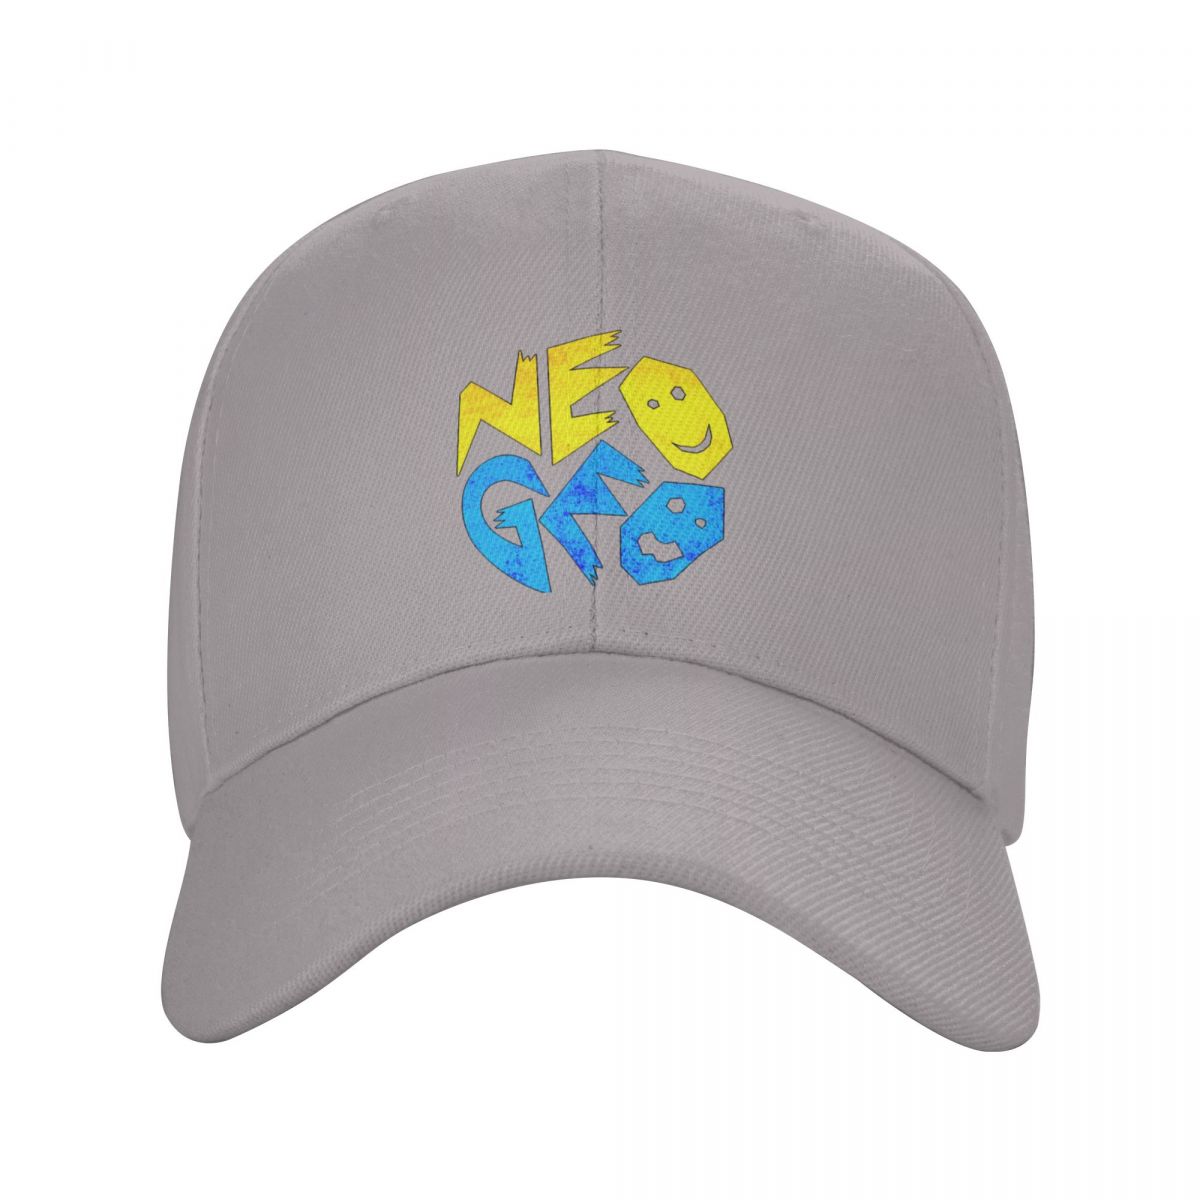 Neo Geo Arcade Game - Retro Gamer - Snapback Baseball Cap - Summer Hat For Men and Women-Gray-Adjustable Cap-